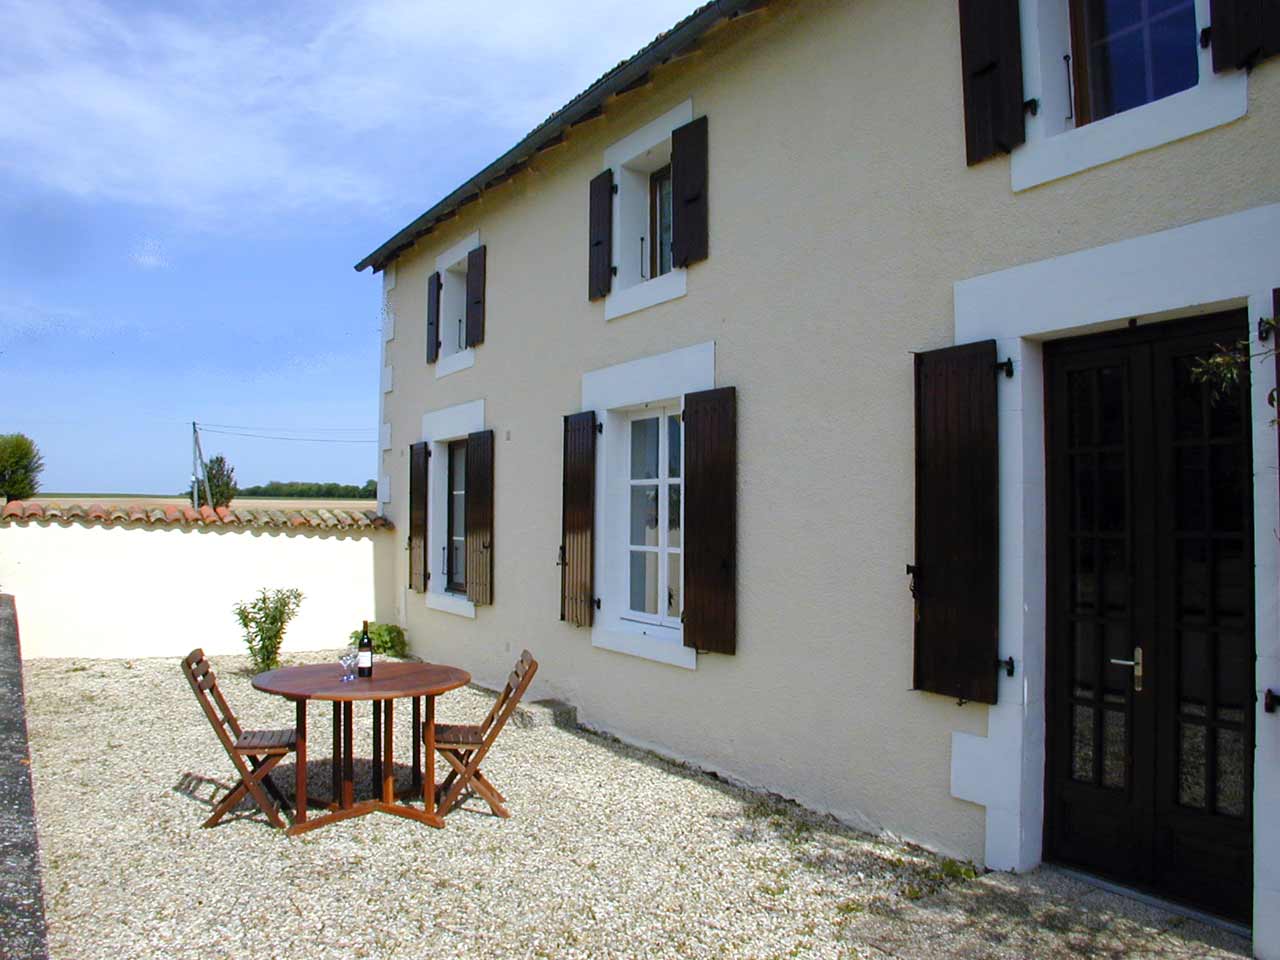 Charentaise house for sale, 3/4 bedrooms, Deux-Sevres, Poitou-Charentes, France